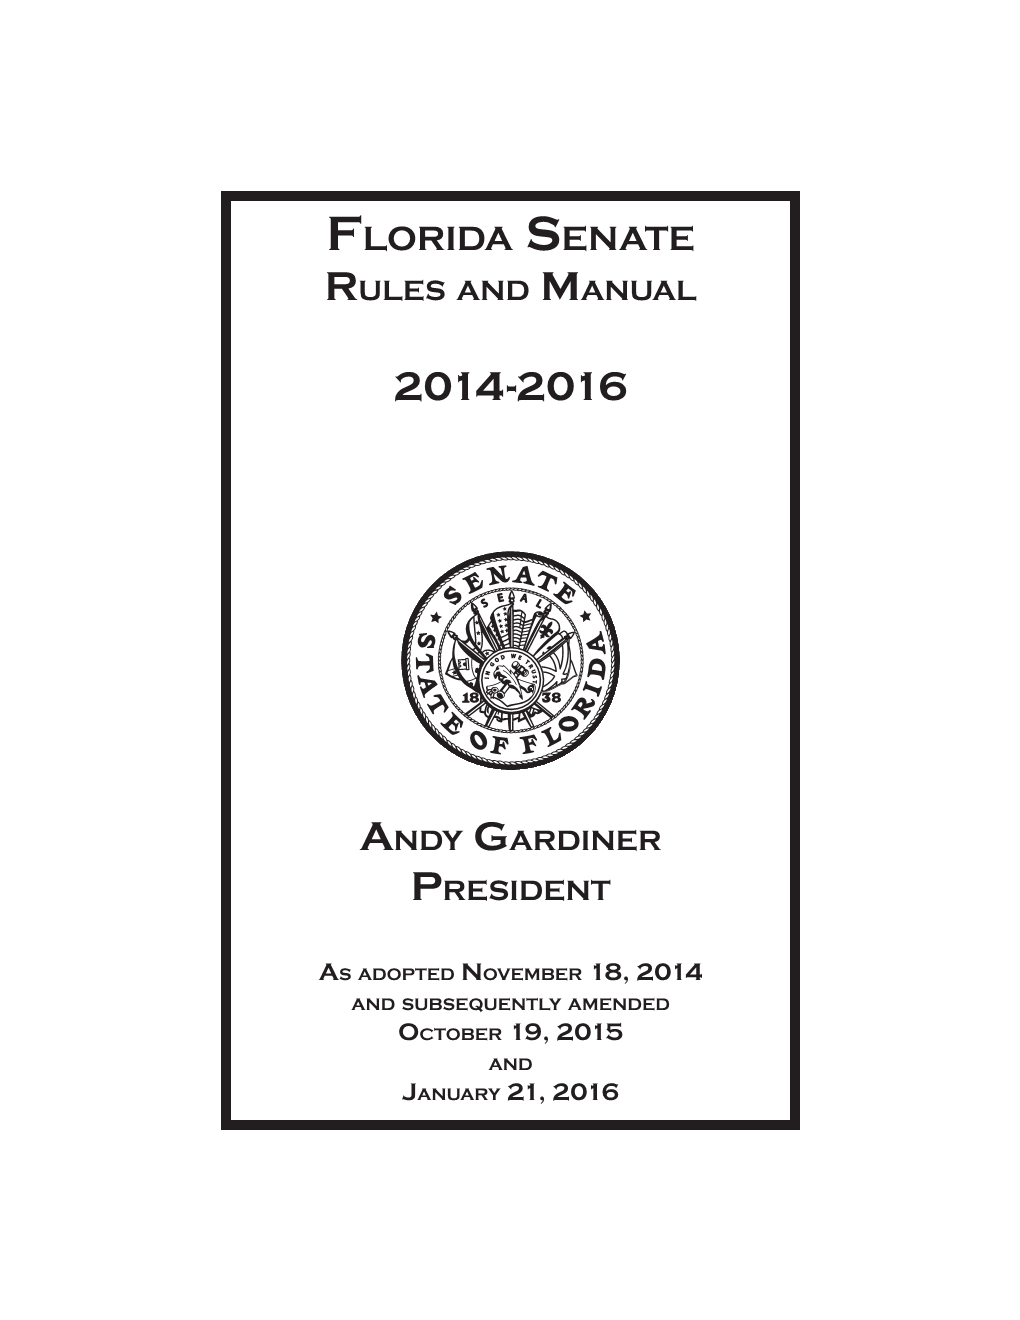 Florida Senate Rules and Manual